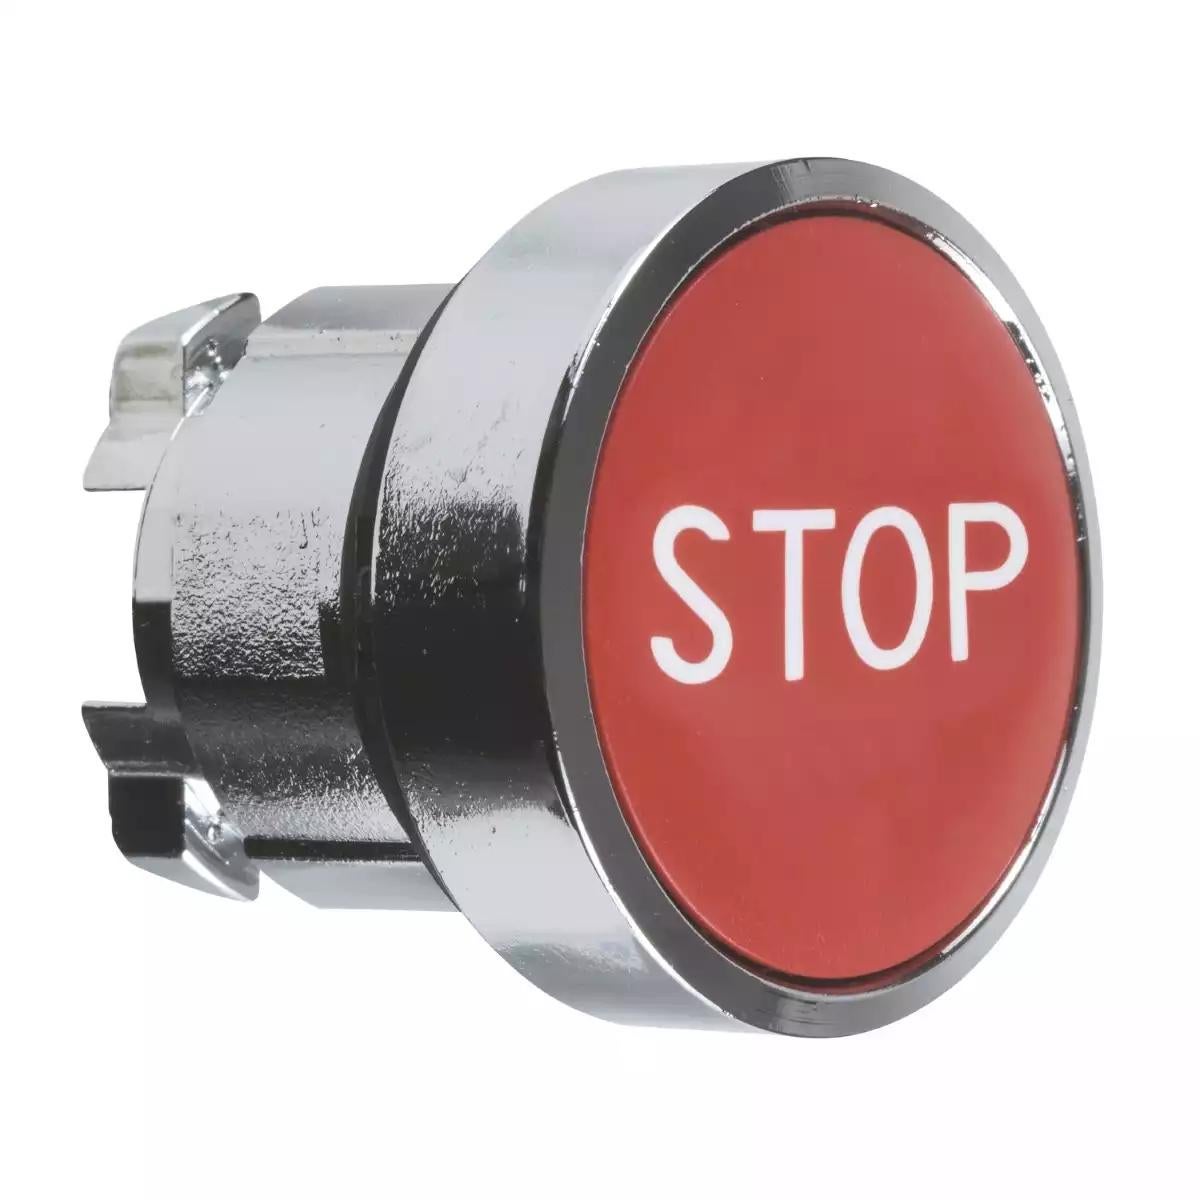 Push button head, Harmony XB4, metal, flush, red, 22mm, spring return, marked STOP